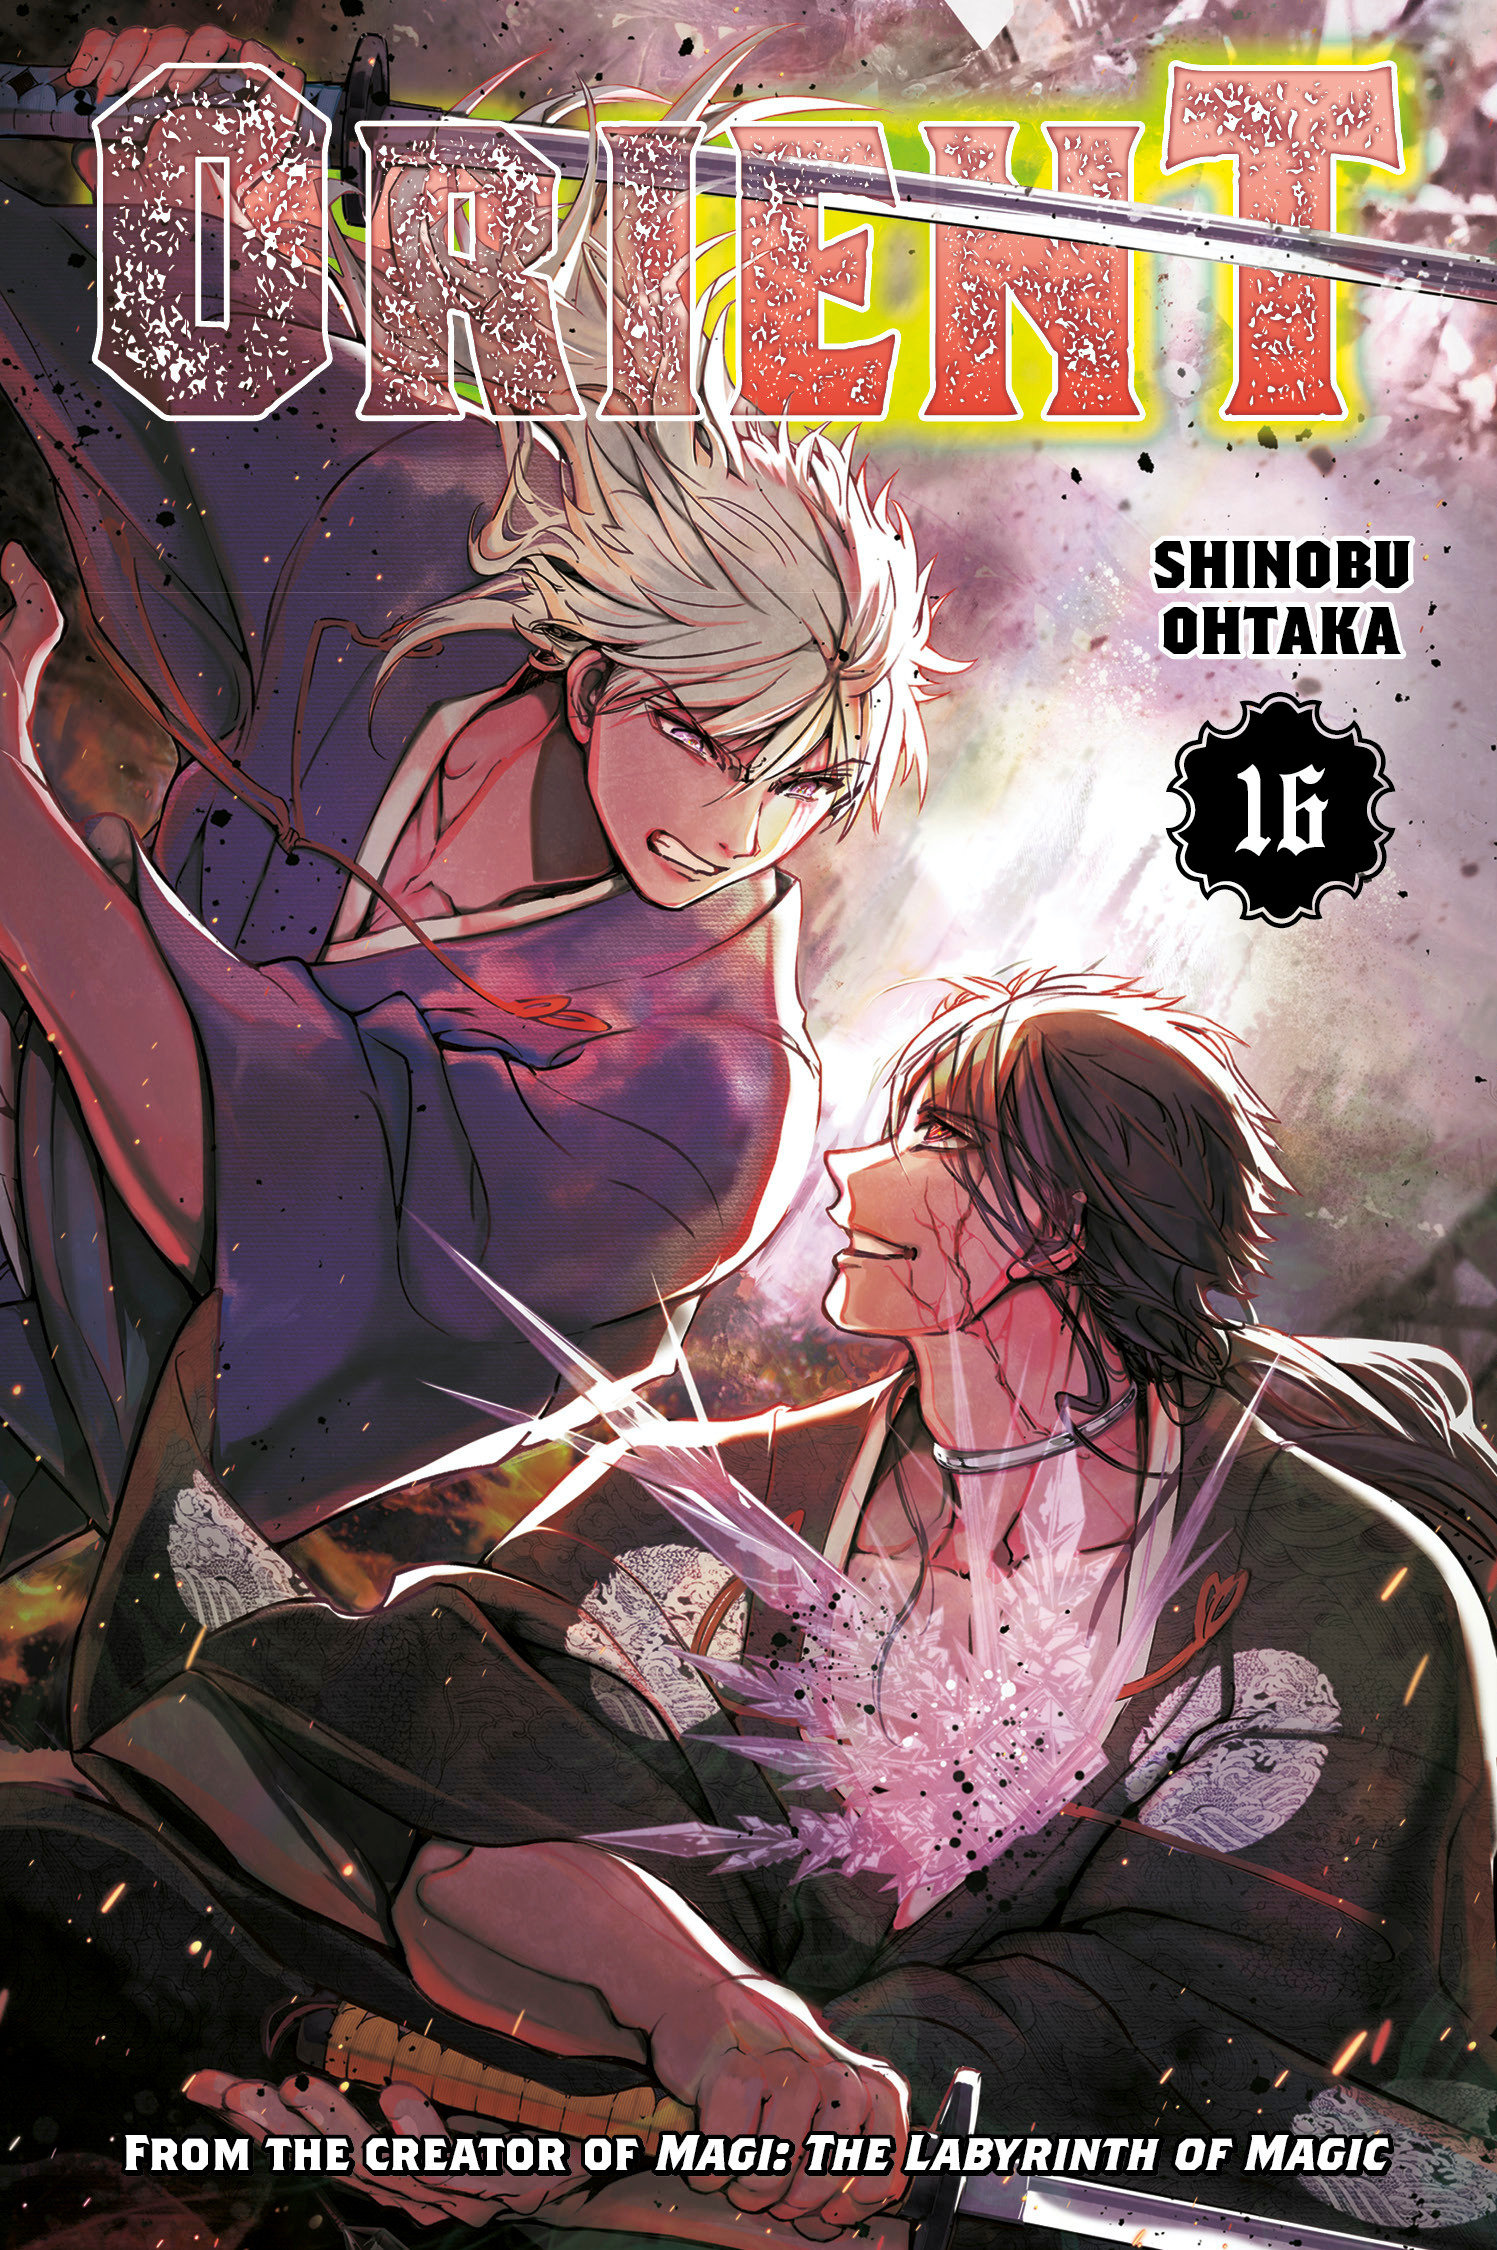 Orient Manga Volume 16